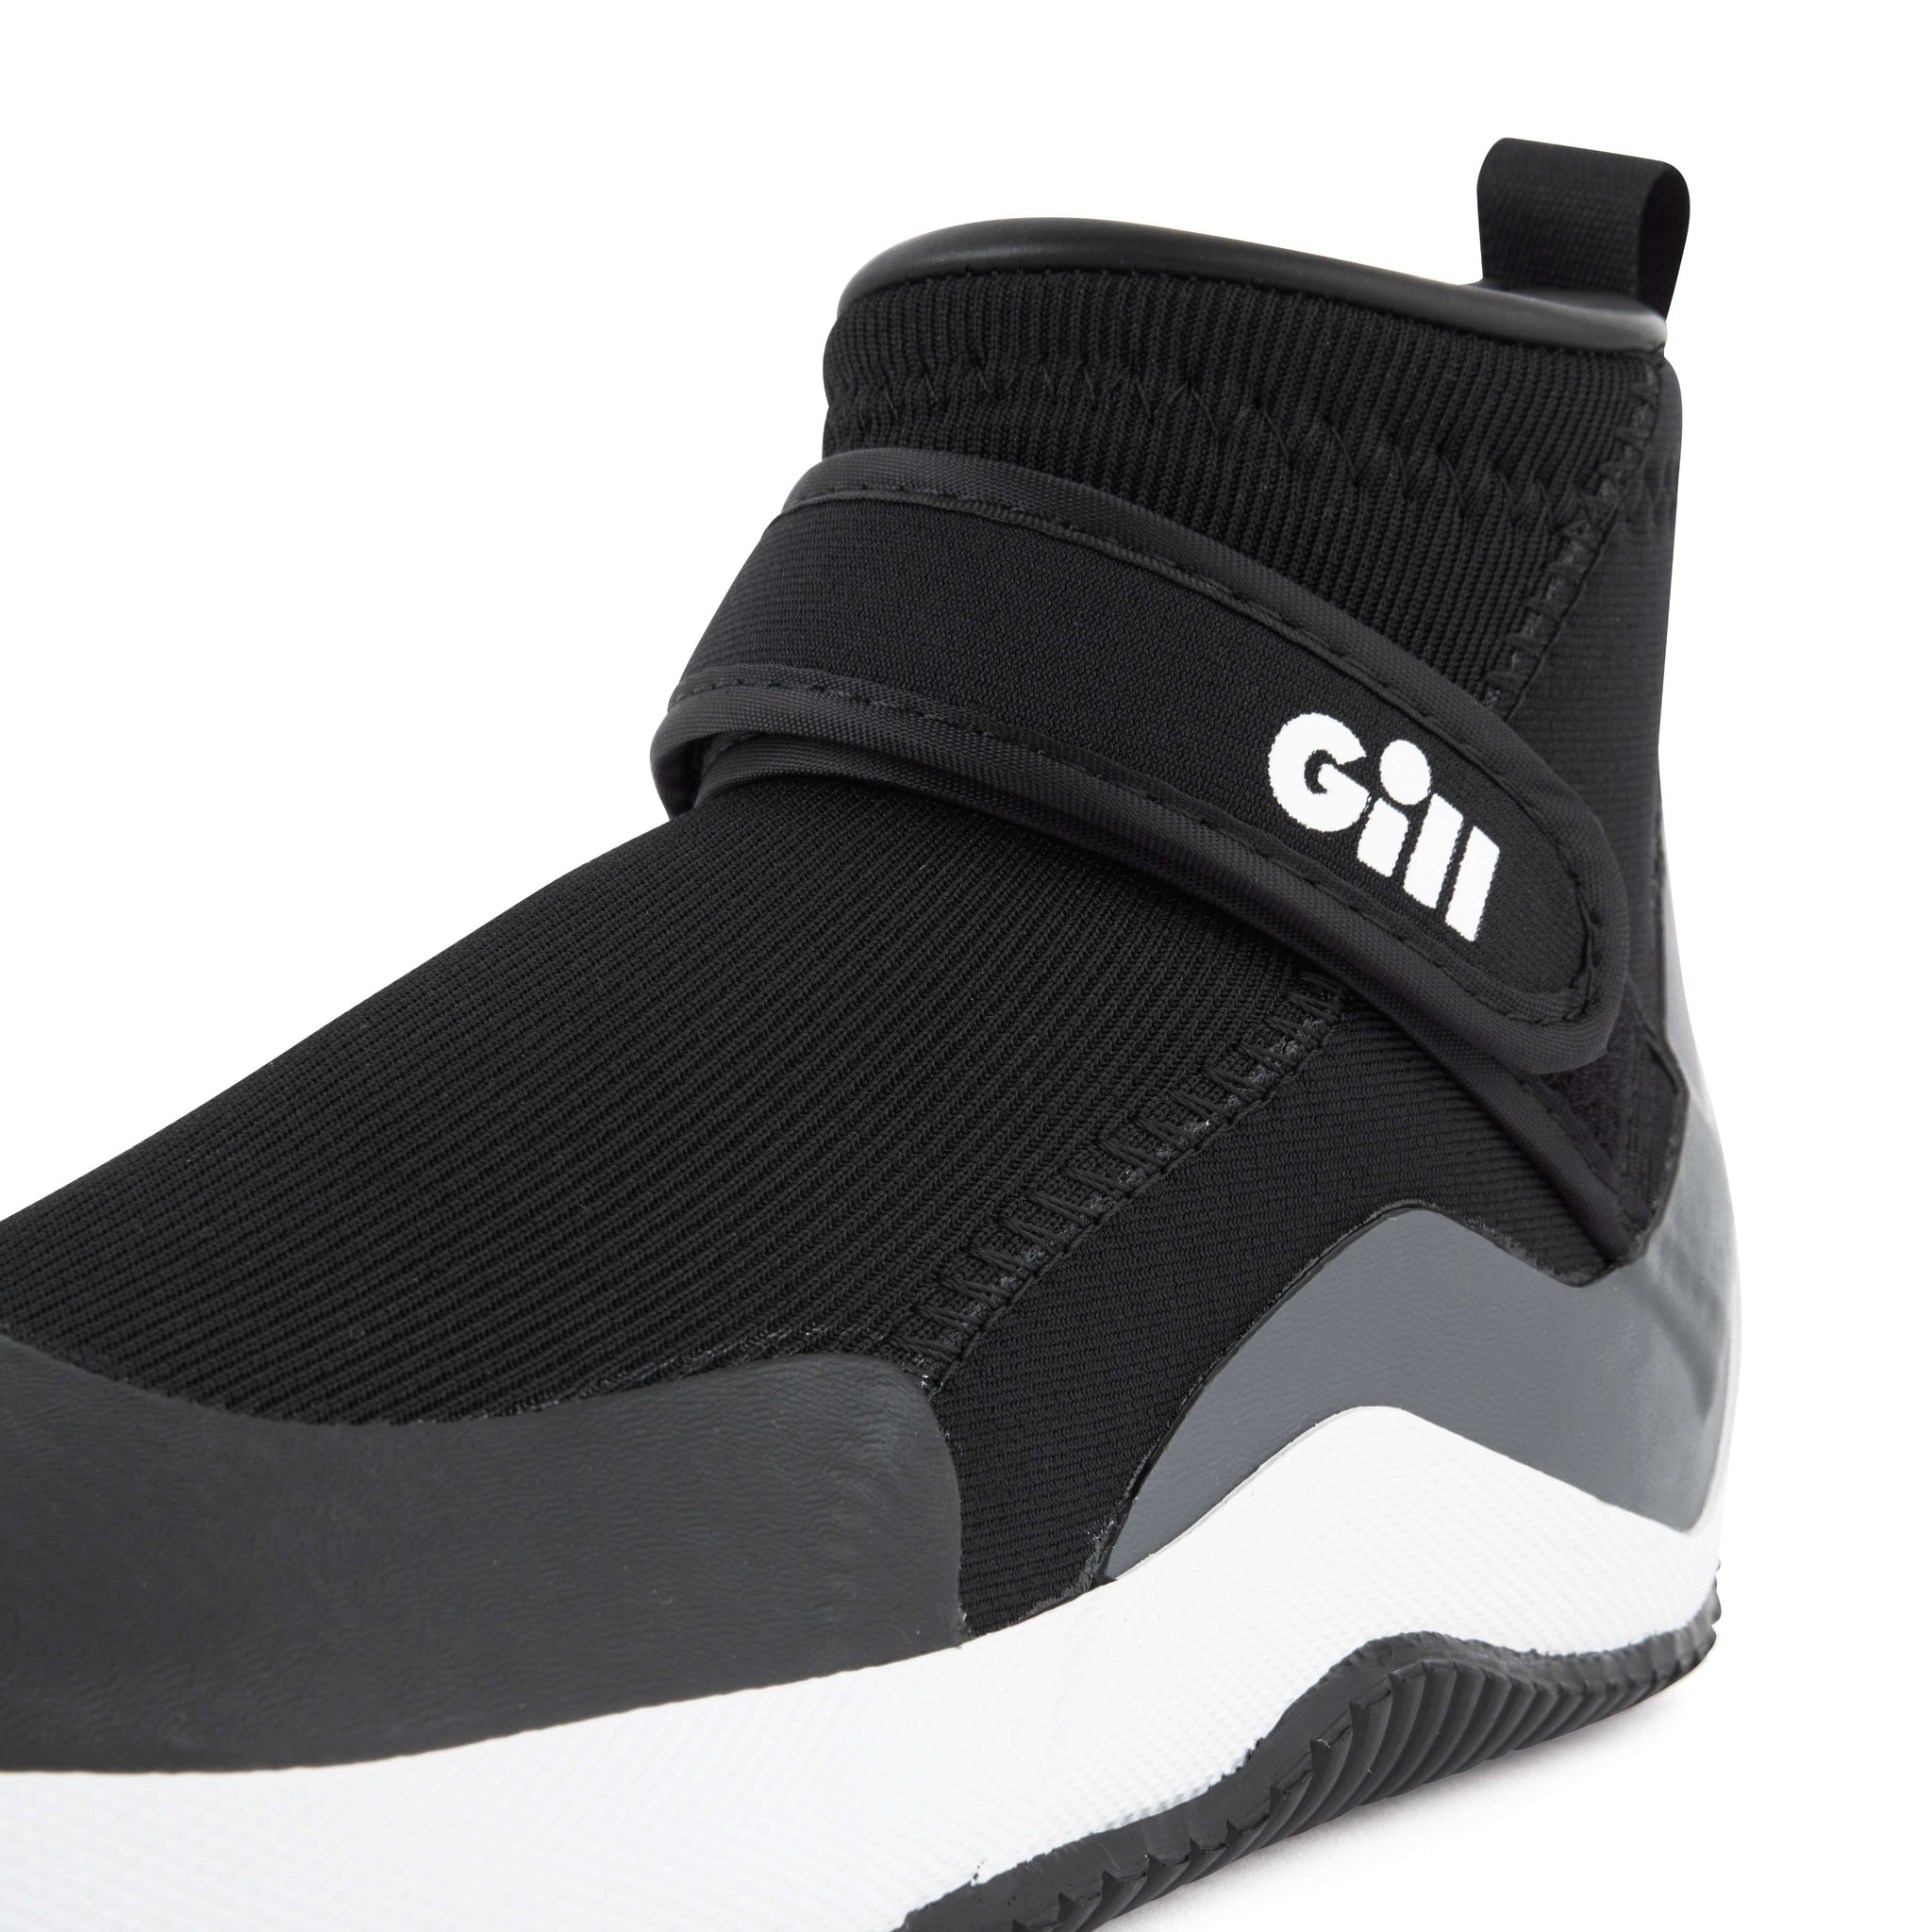 Gill - Aquatech Shoes